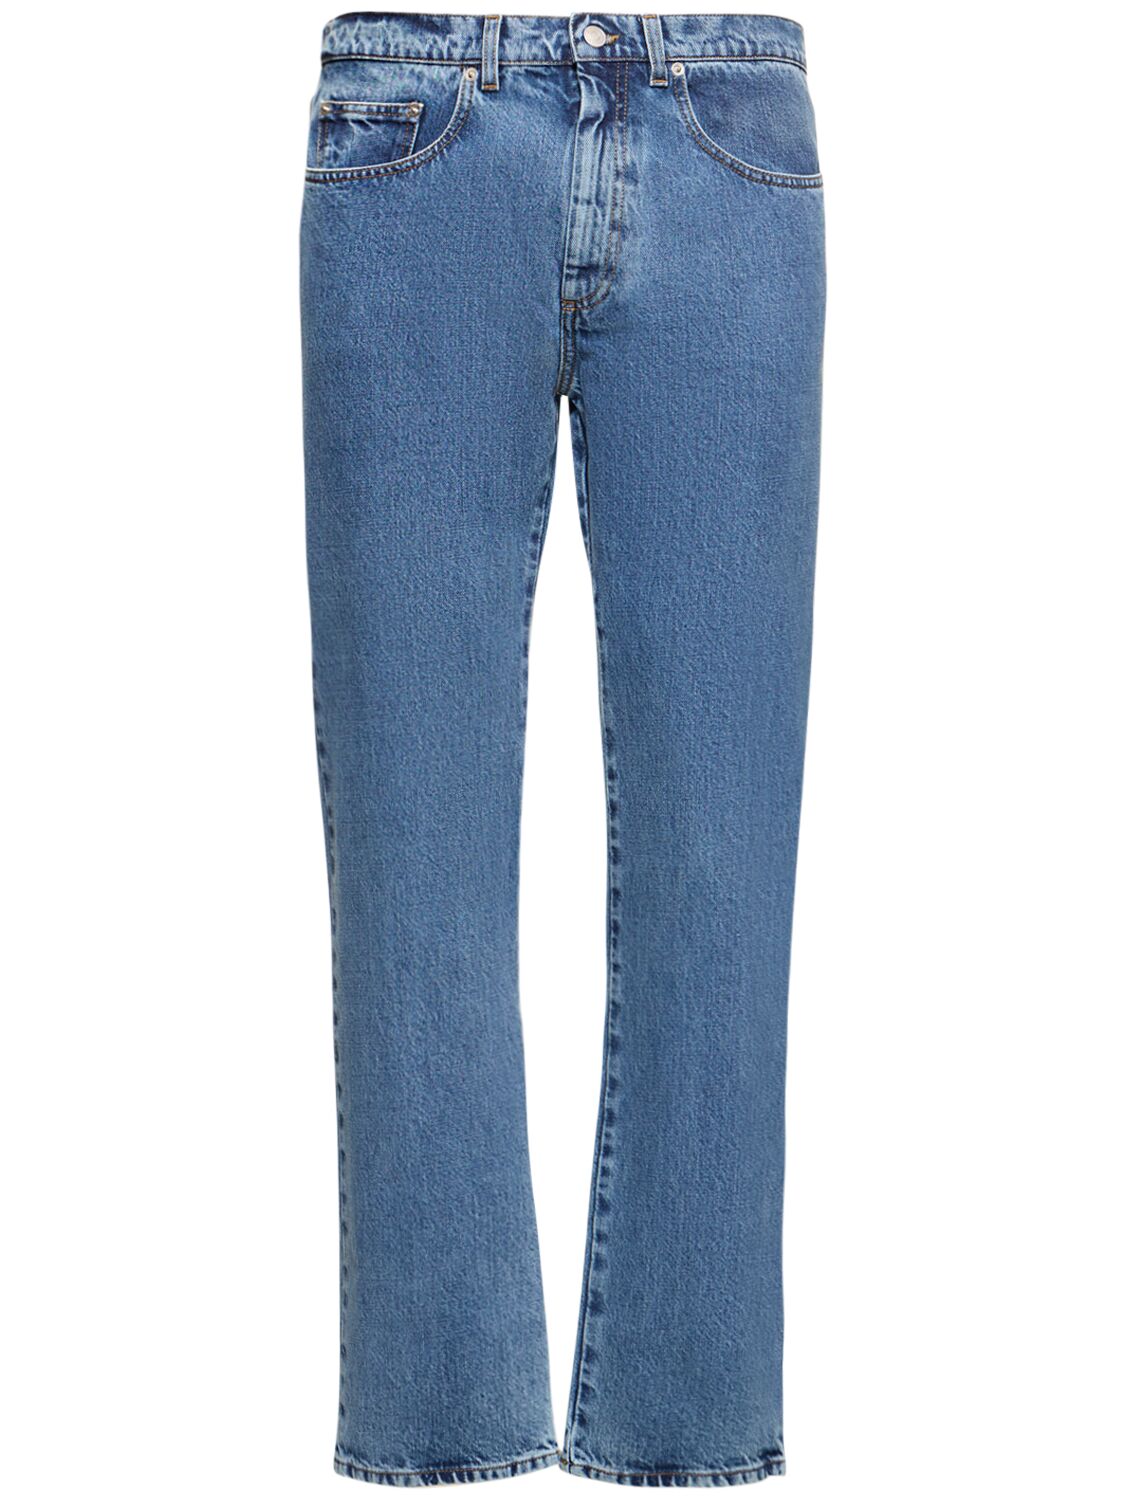 BALLY Cotton Denim Jeans